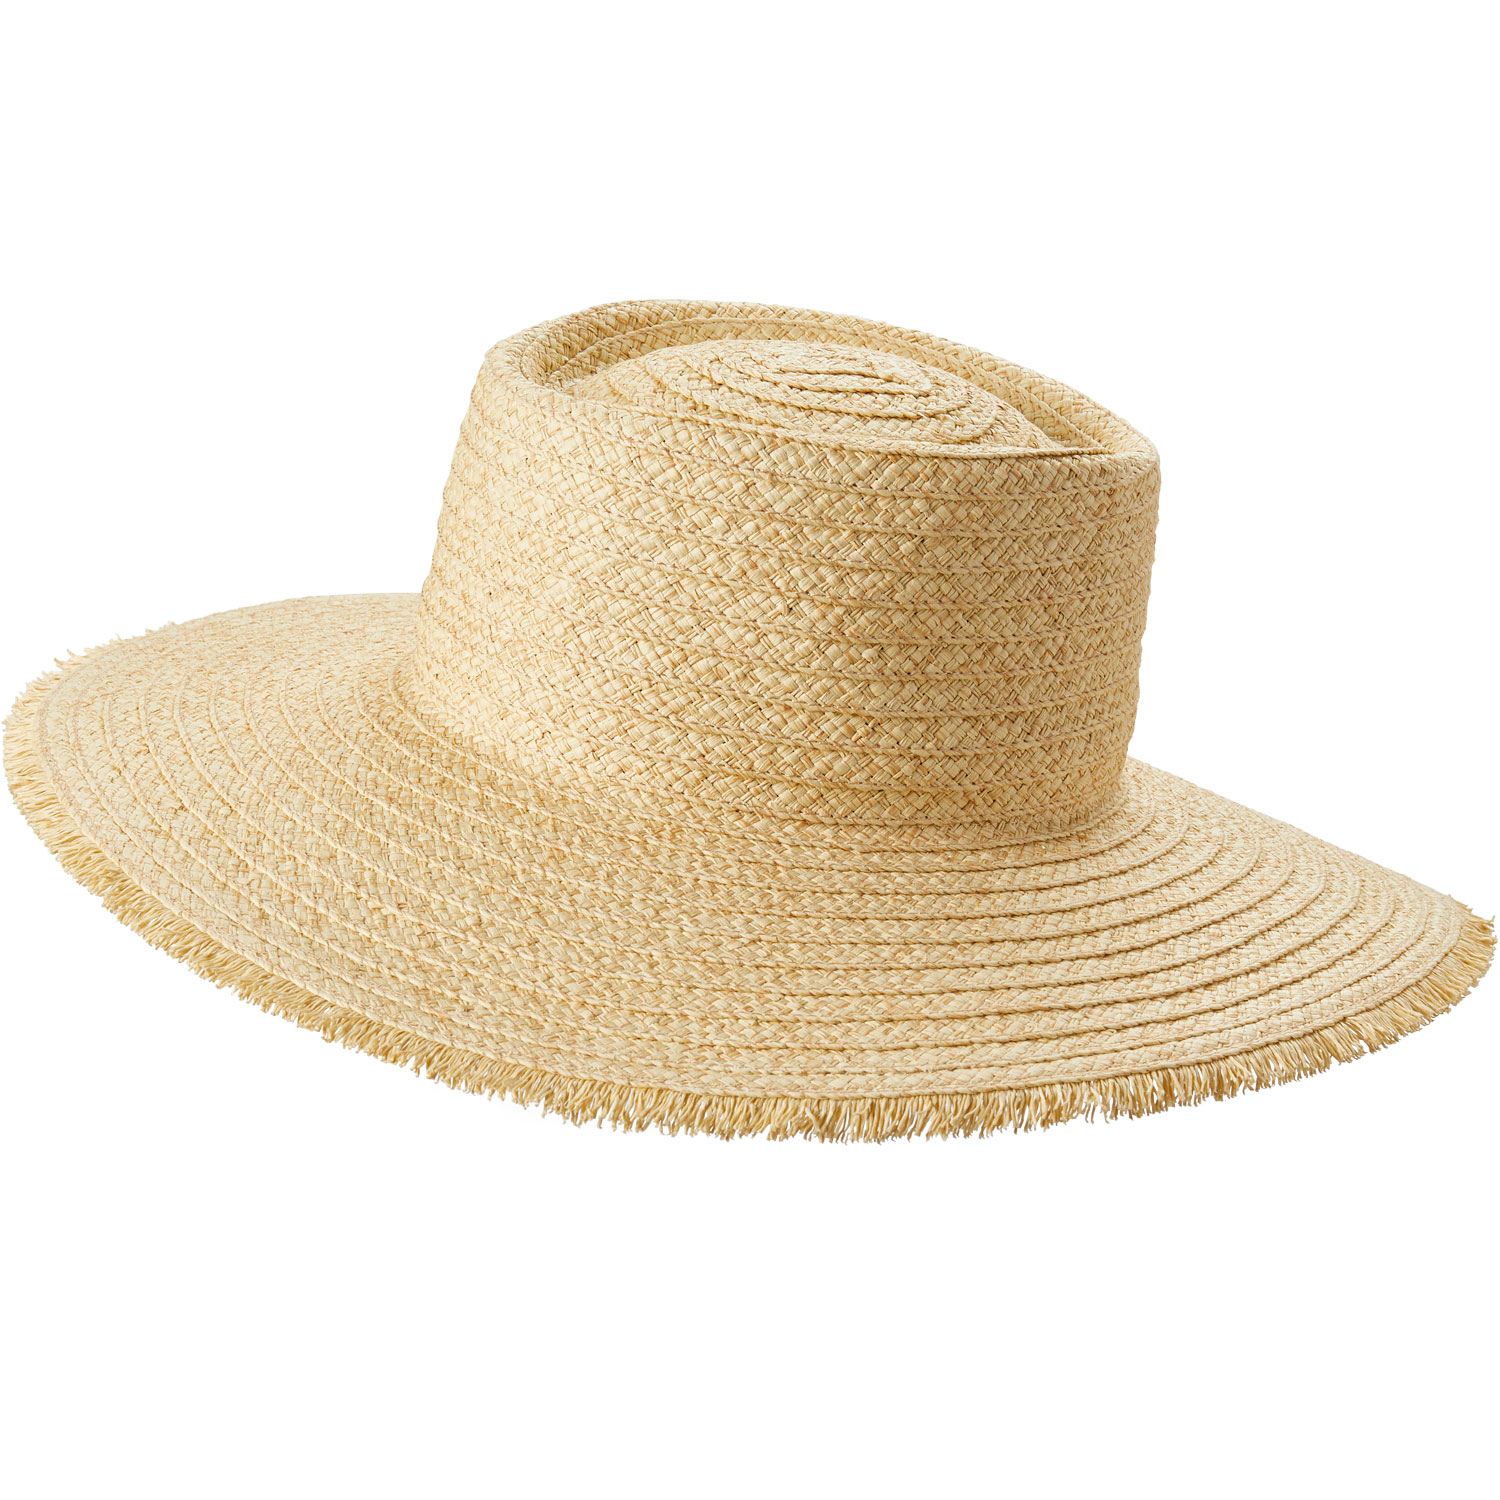 Nobull - Performance Hat - Sand - Size Large/XL